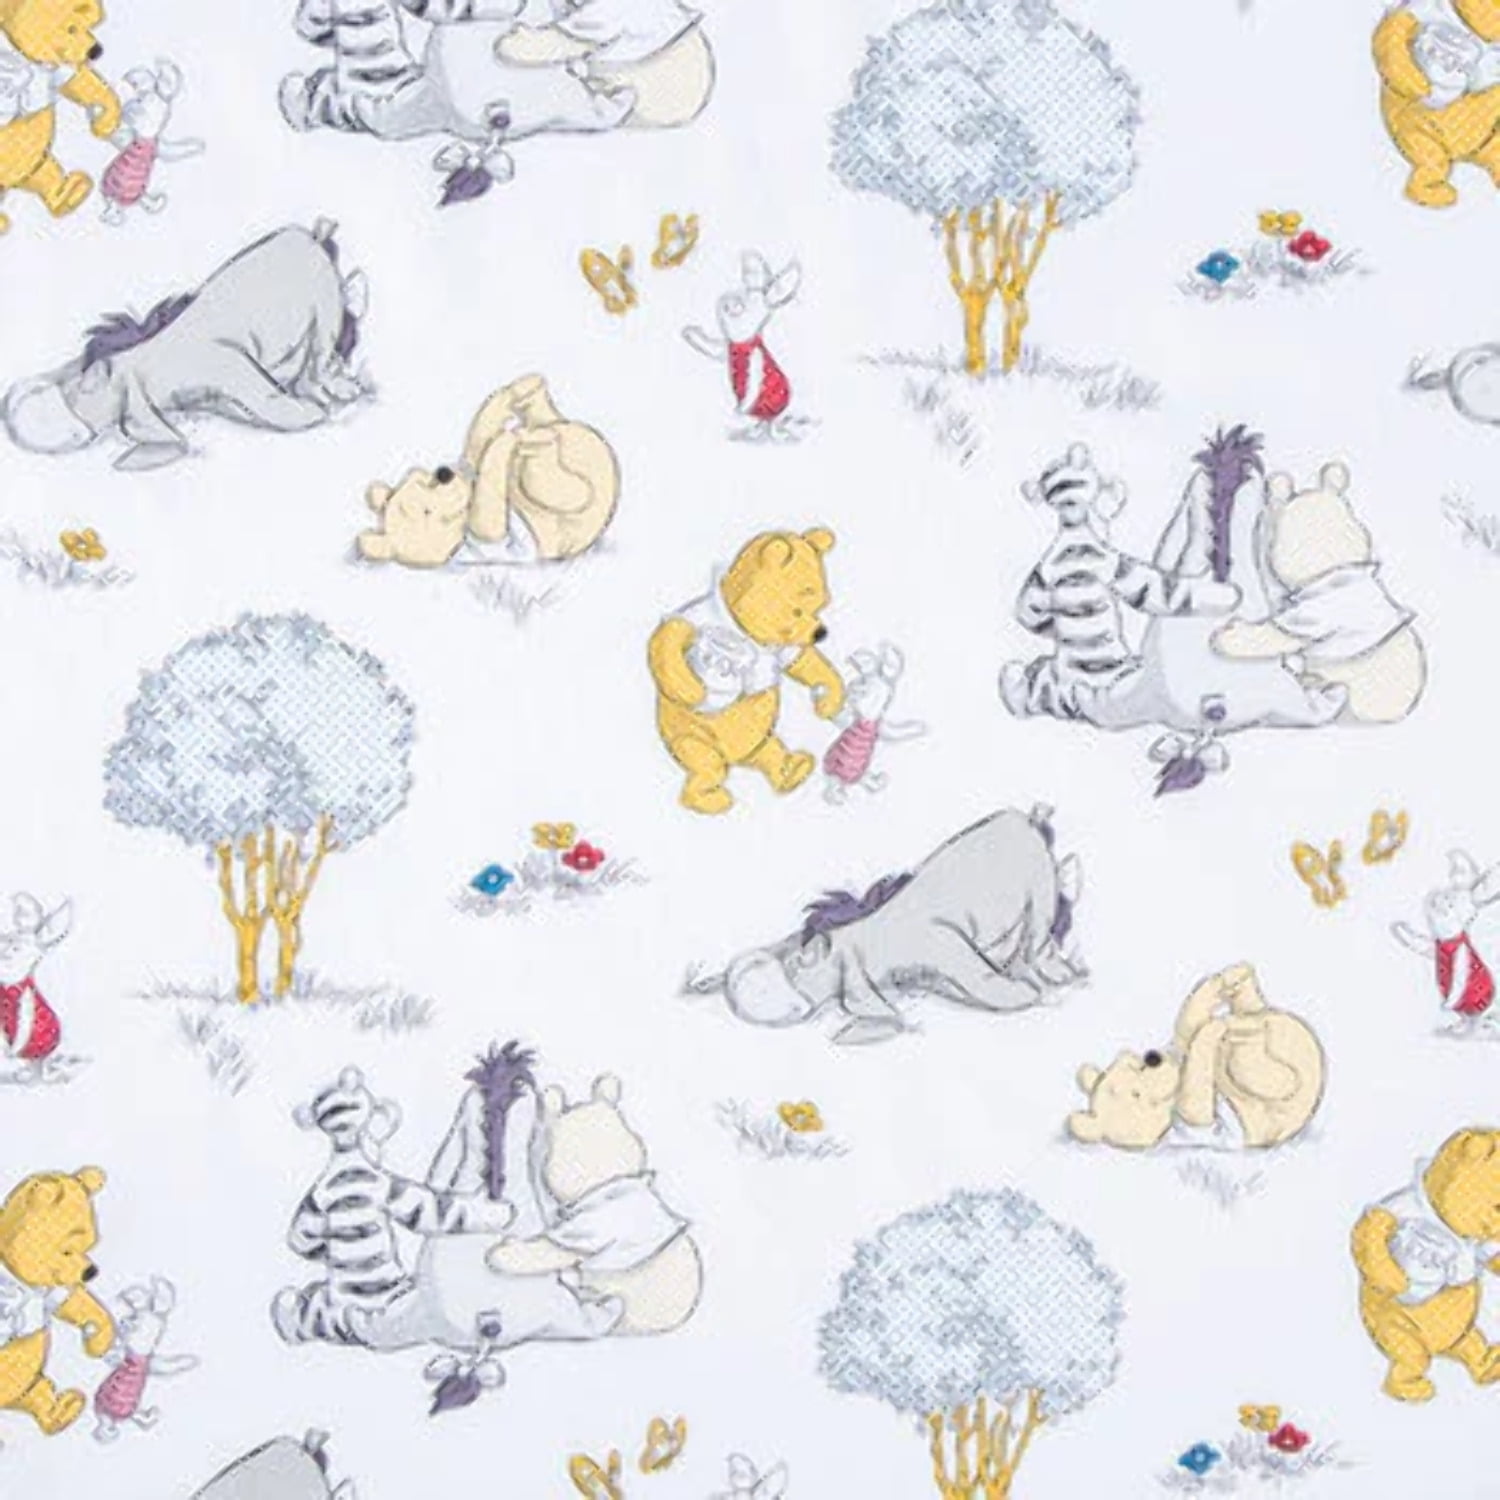 Winnie the Pooh Tigger Piglet Eeyore Sky baby Soft book fabric